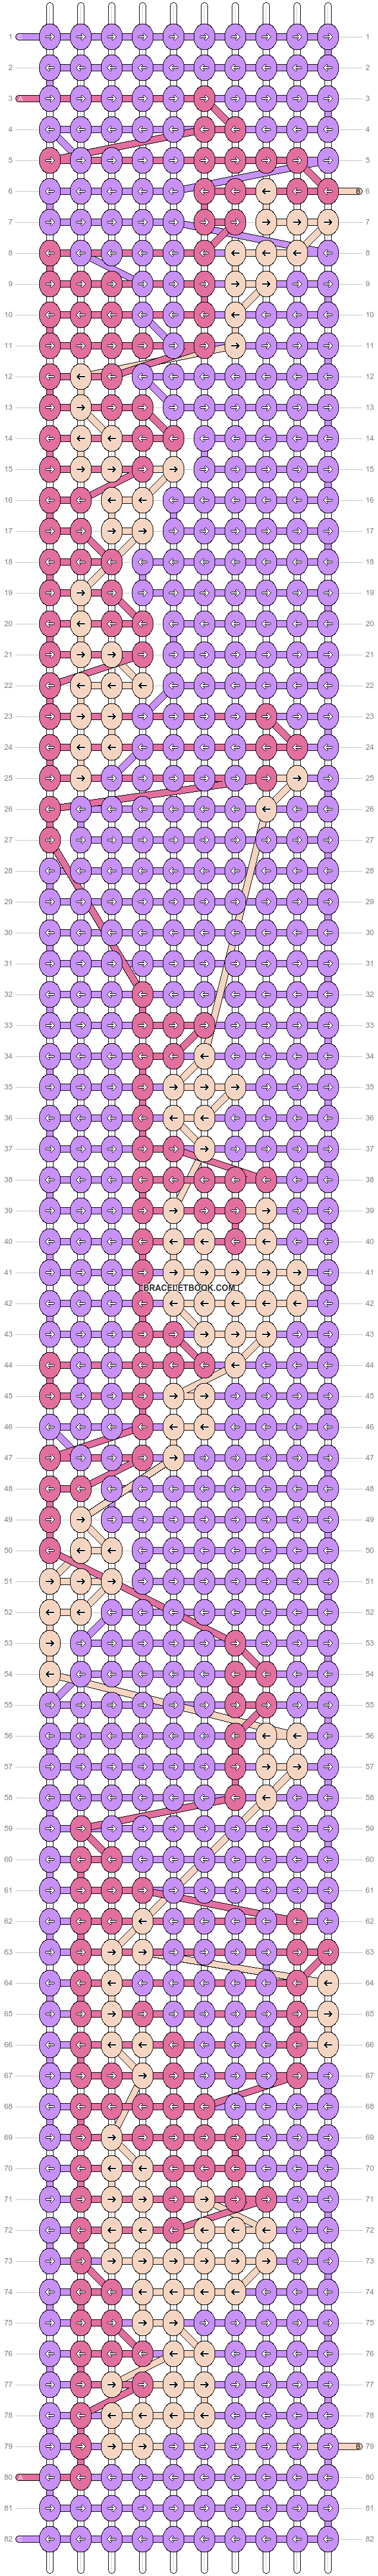 Alpha pattern #34719 variation #45214 pattern